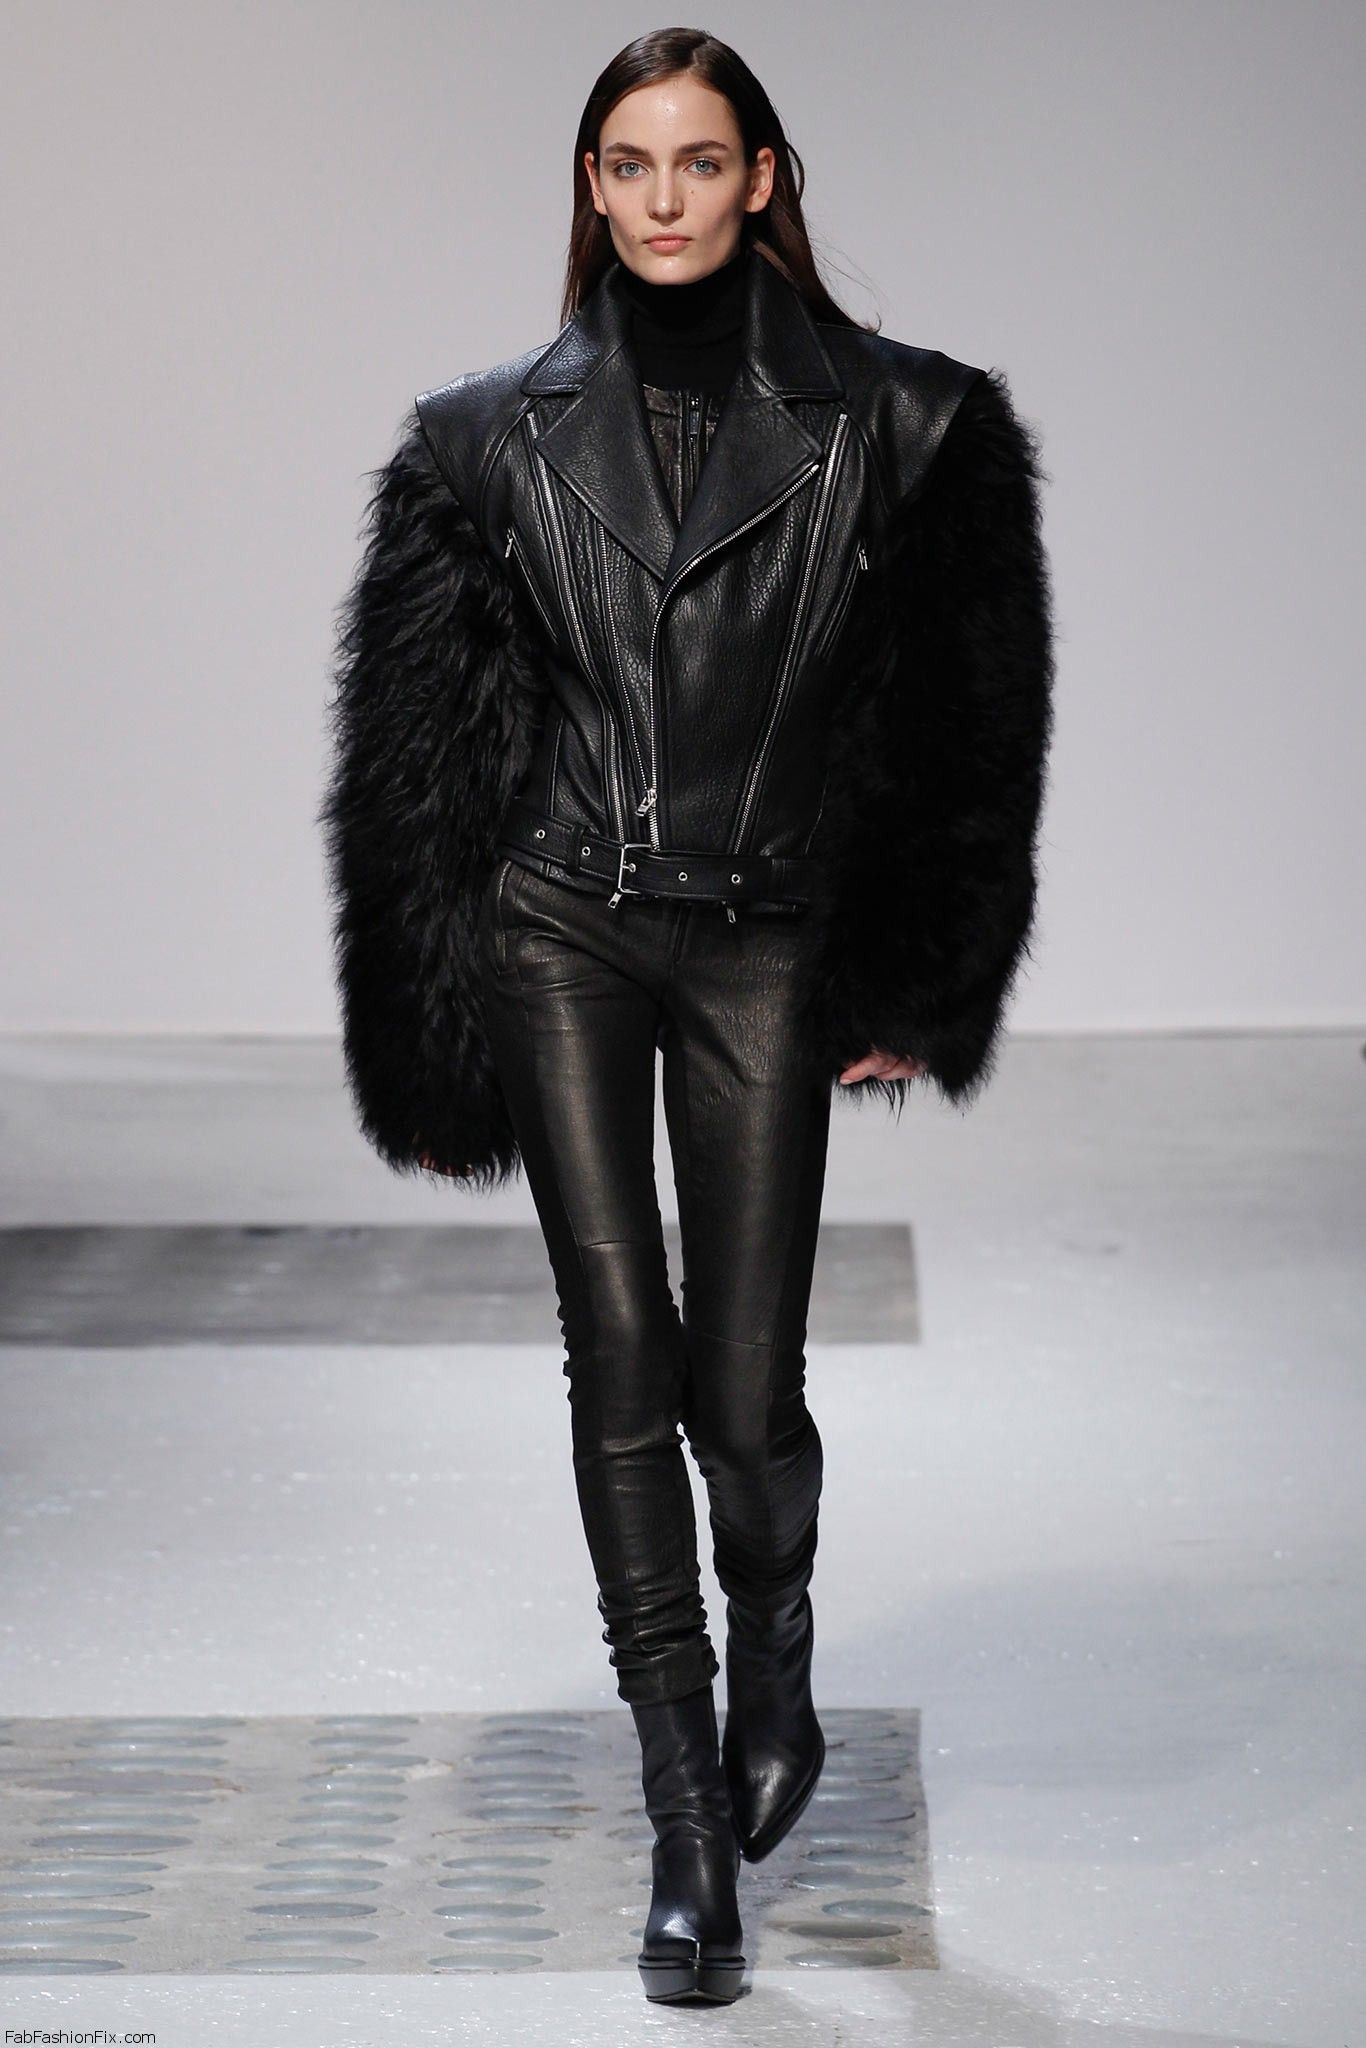 Barbara Bui fall/winter 2014 collection – Paris fashion week | Fab ...